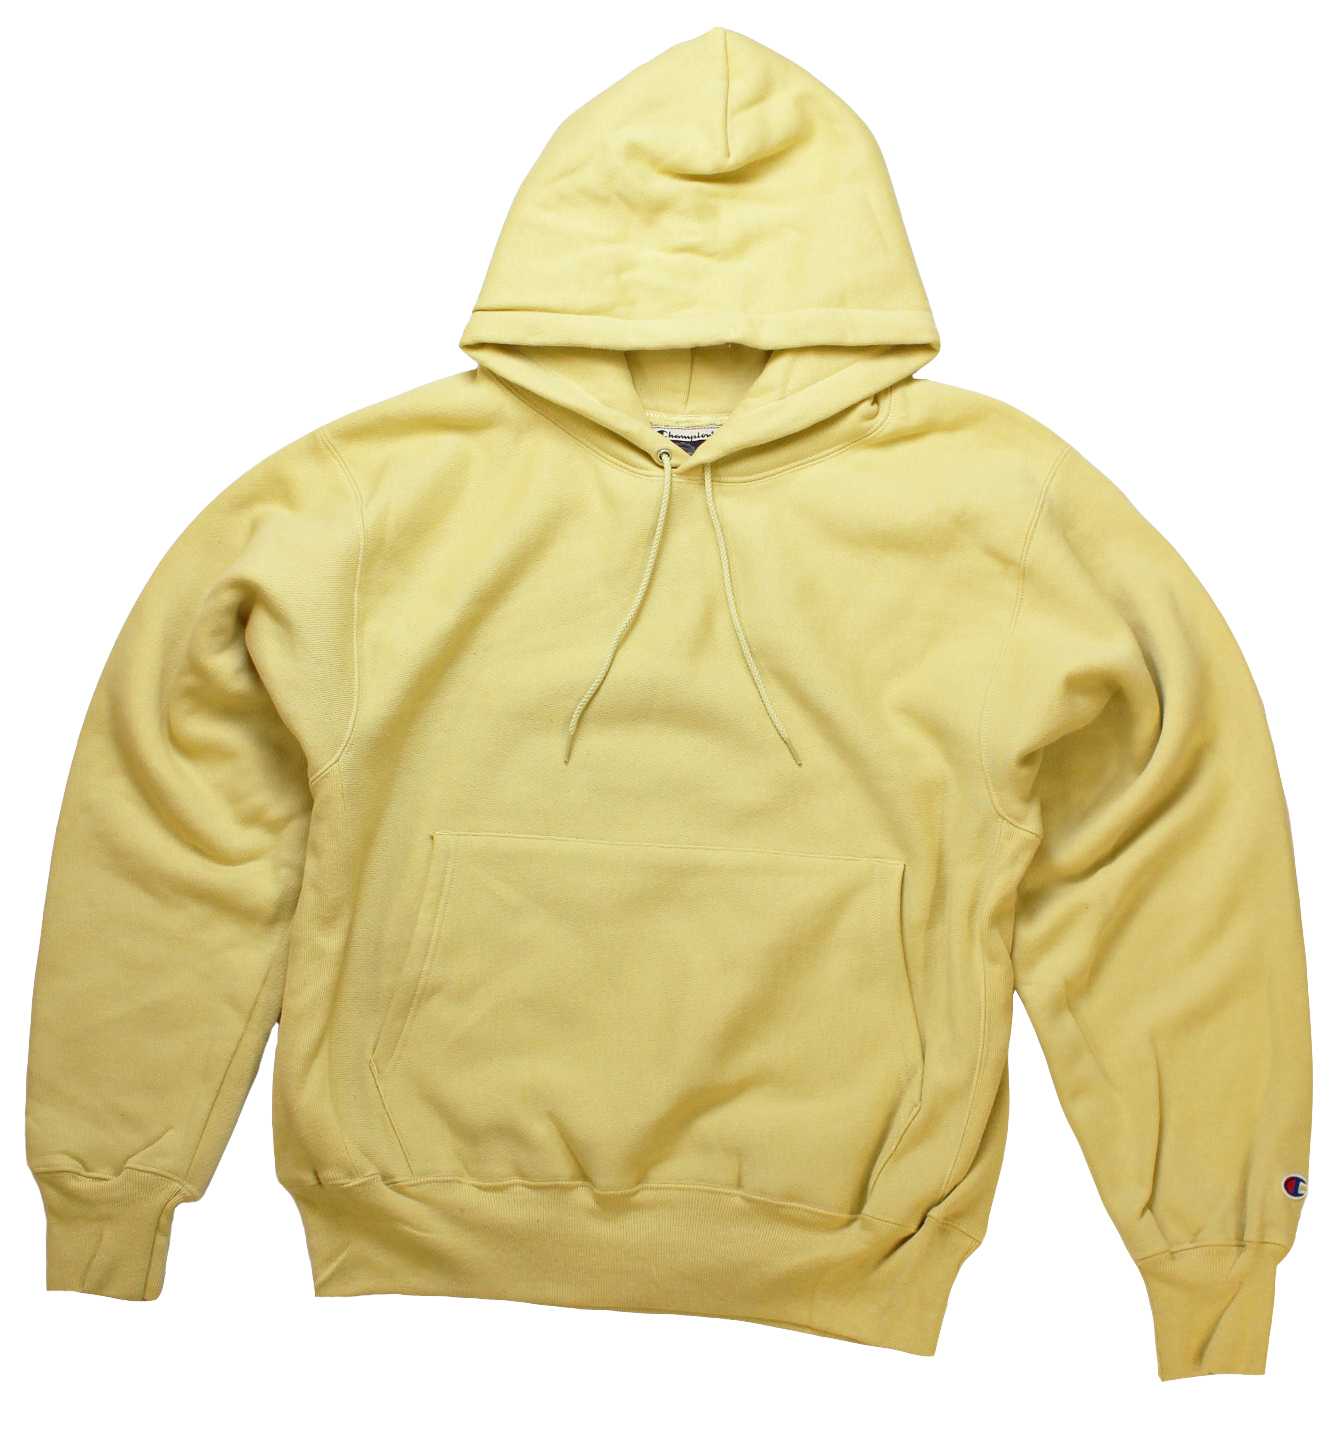 wholesale champion hoodies